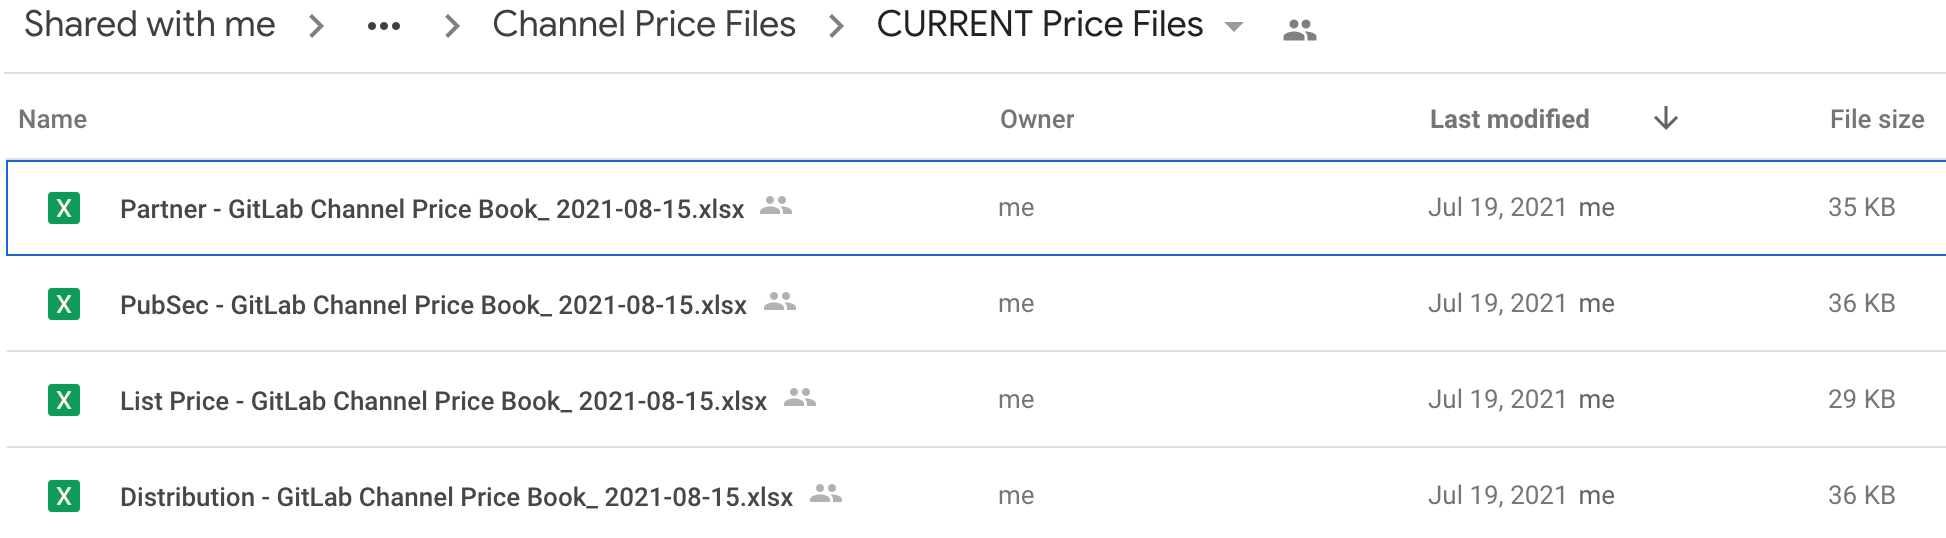 13-Price_File_List